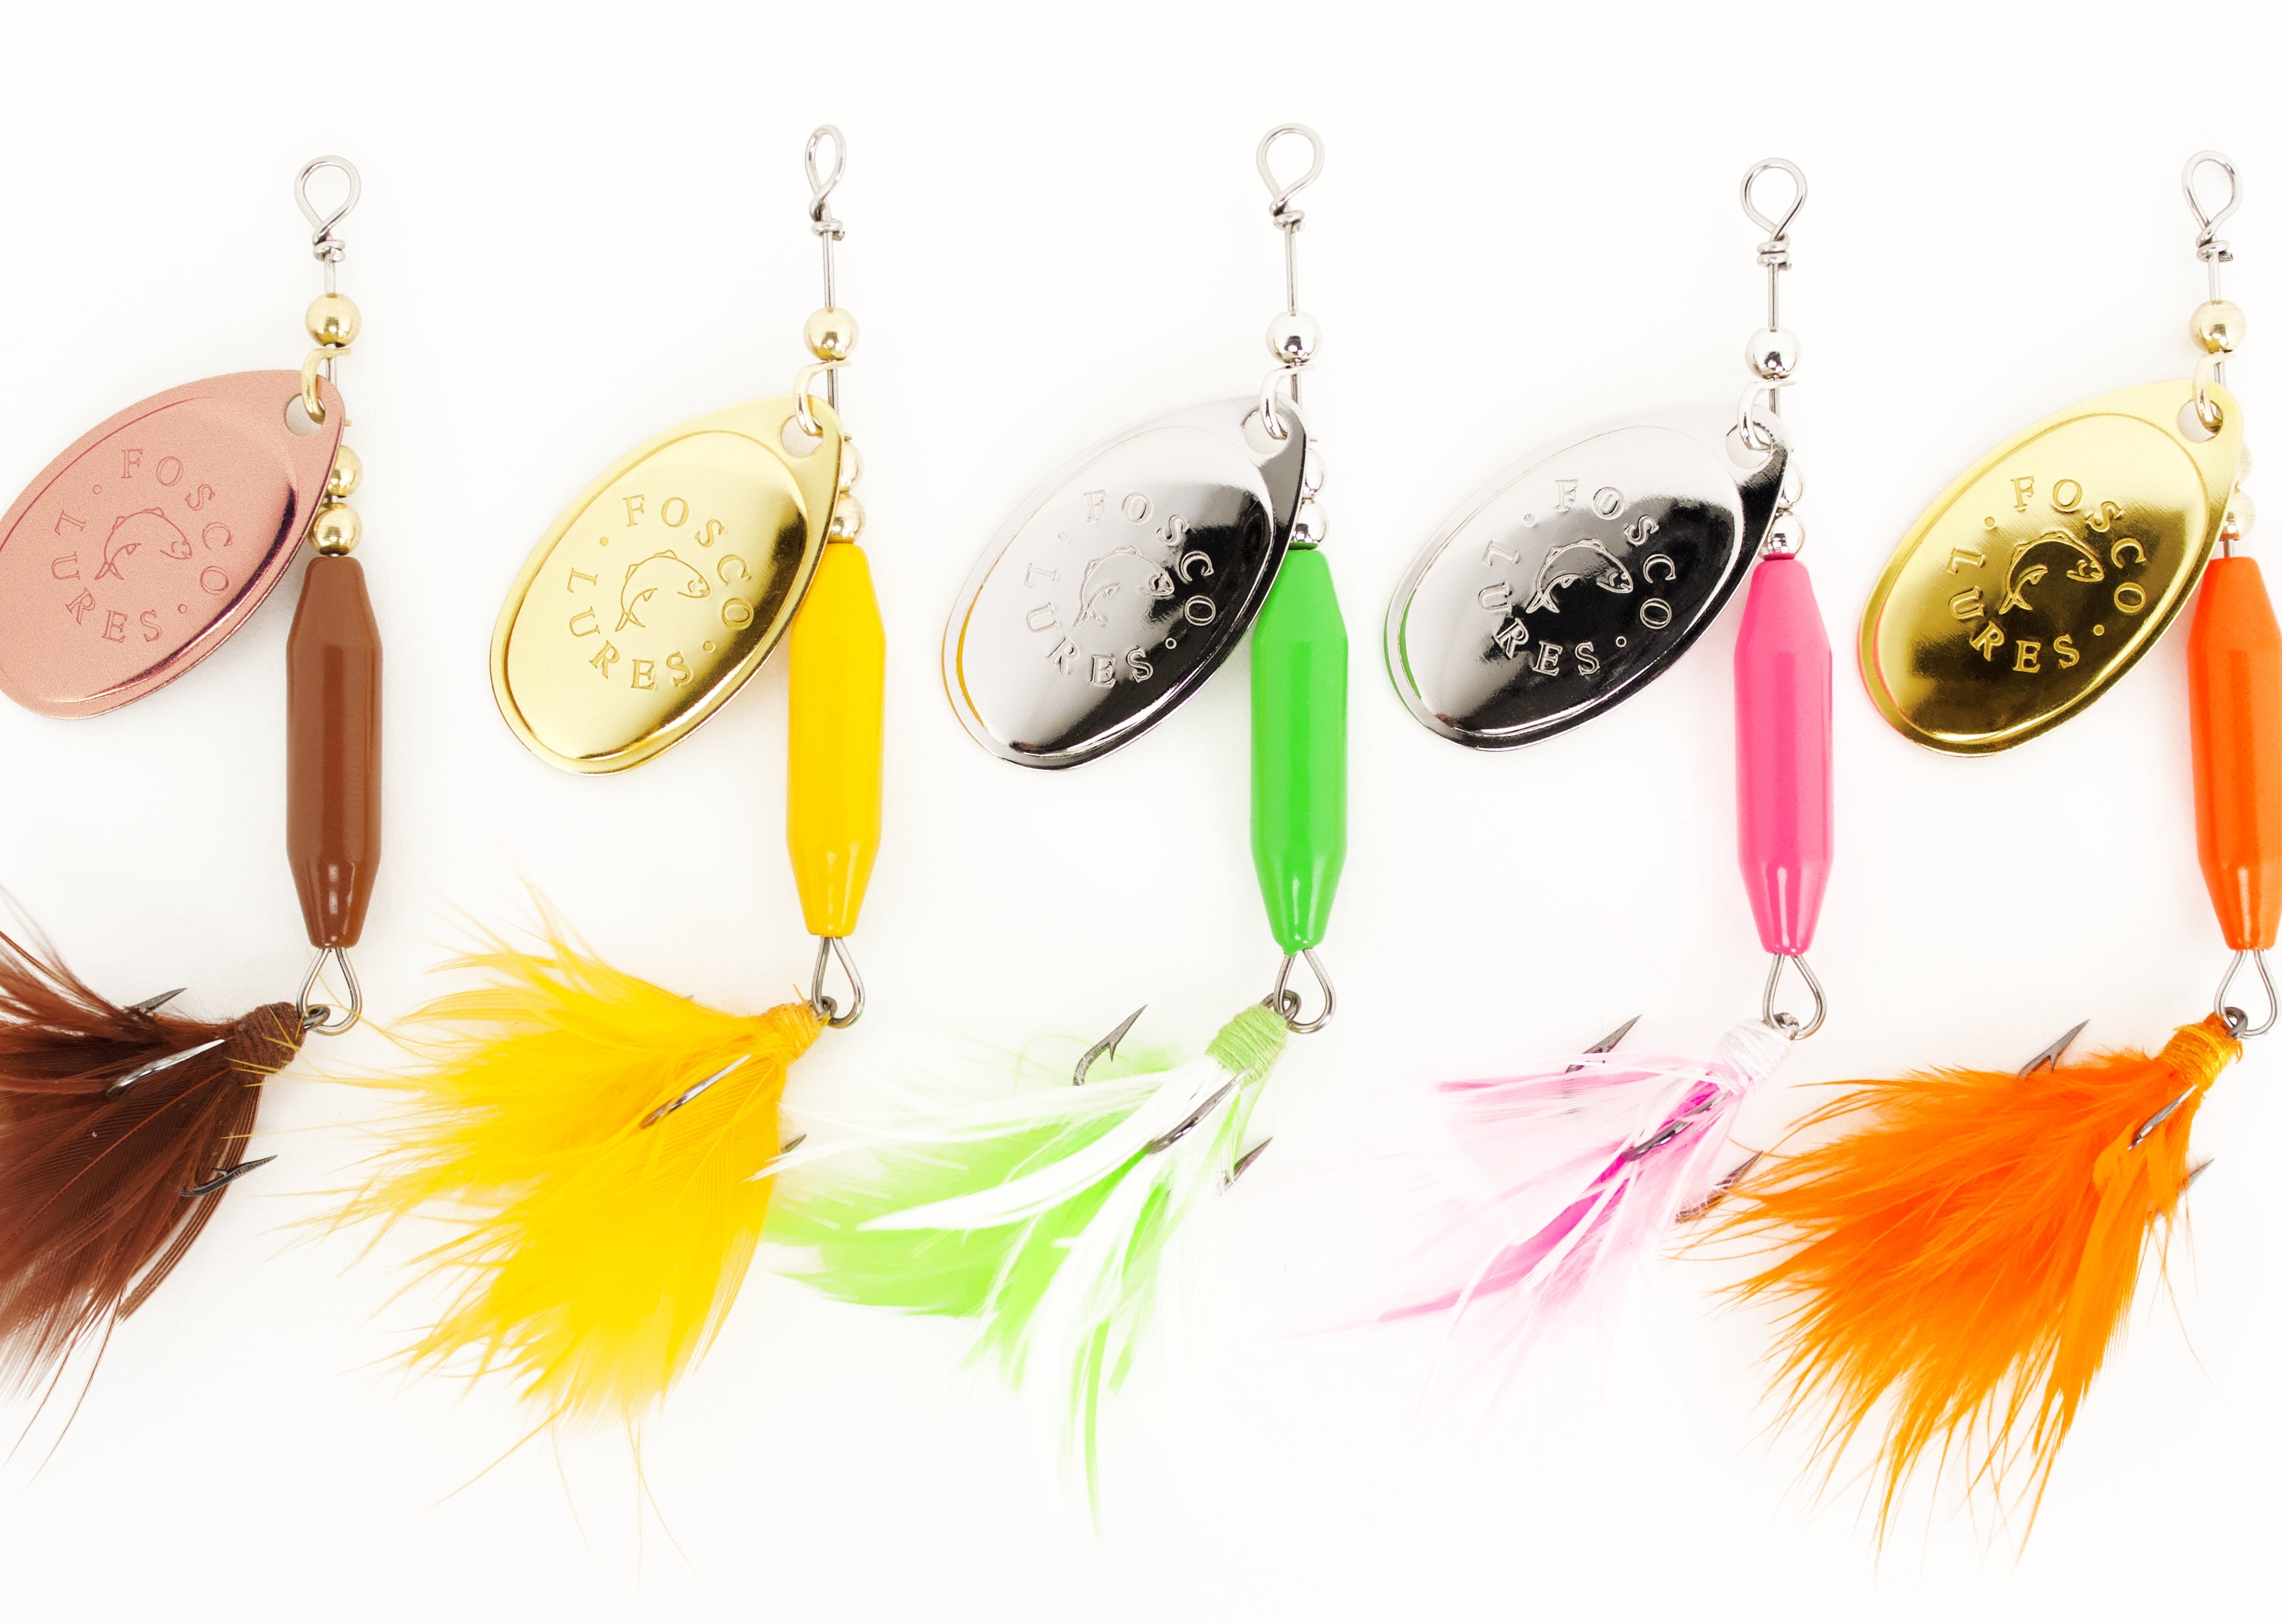 Handmade Fishing Spinners w/ Dressed Hooks – Fosco Fishing Lures